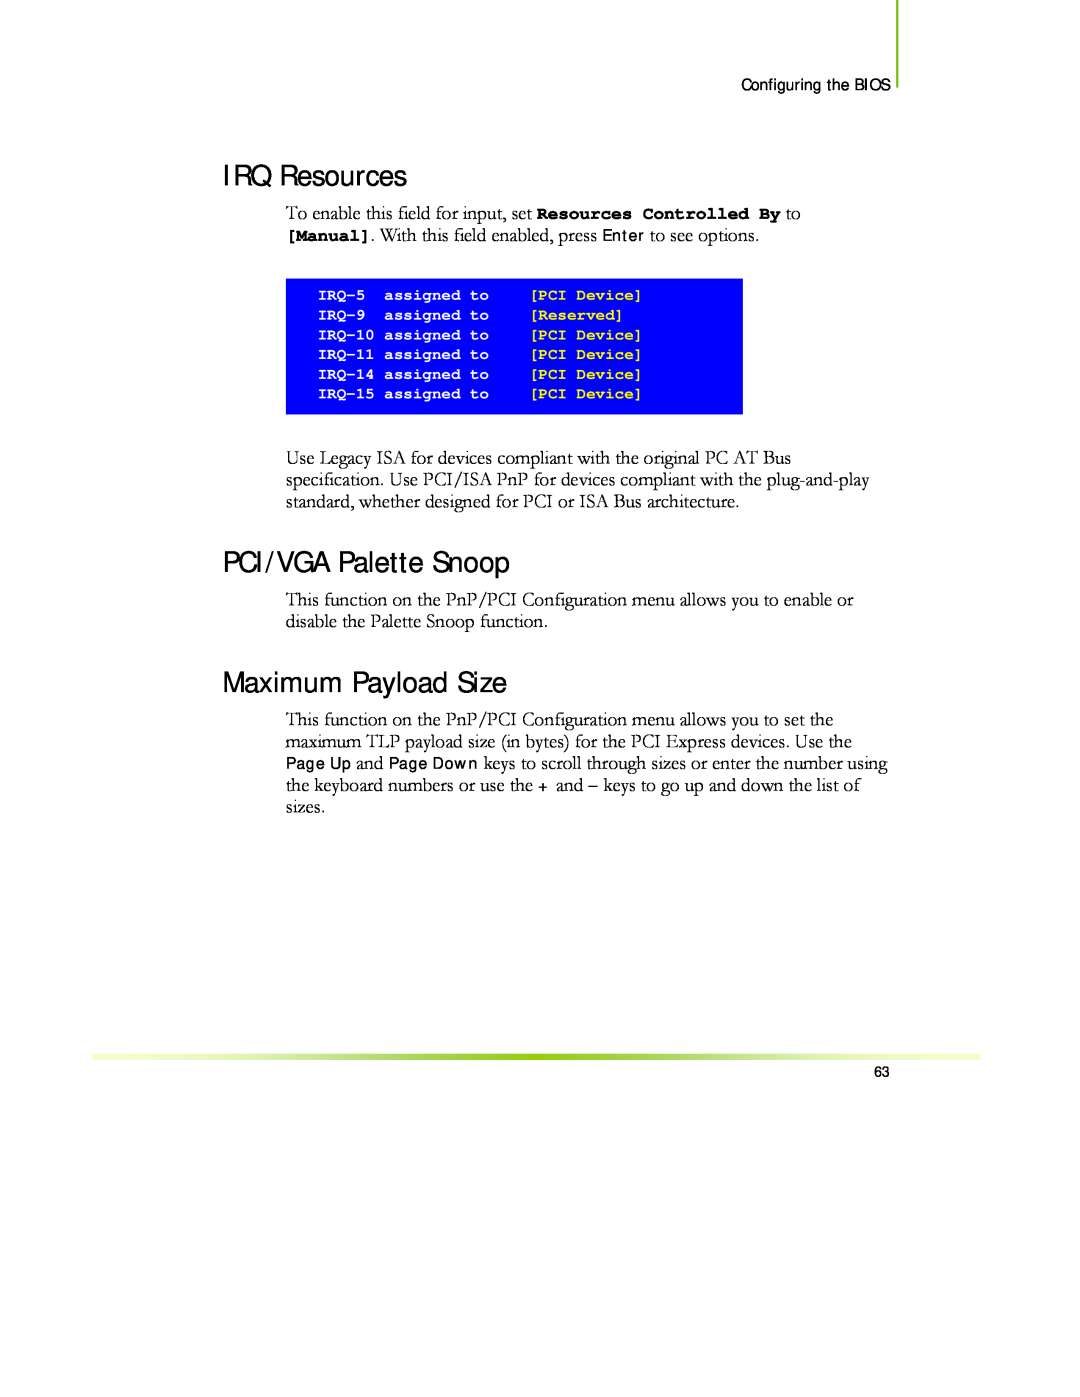 EVGA 122-CK-NF68-XX manual IRQ Resources, PCI/VGA Palette Snoop, Maximum Payload Size 